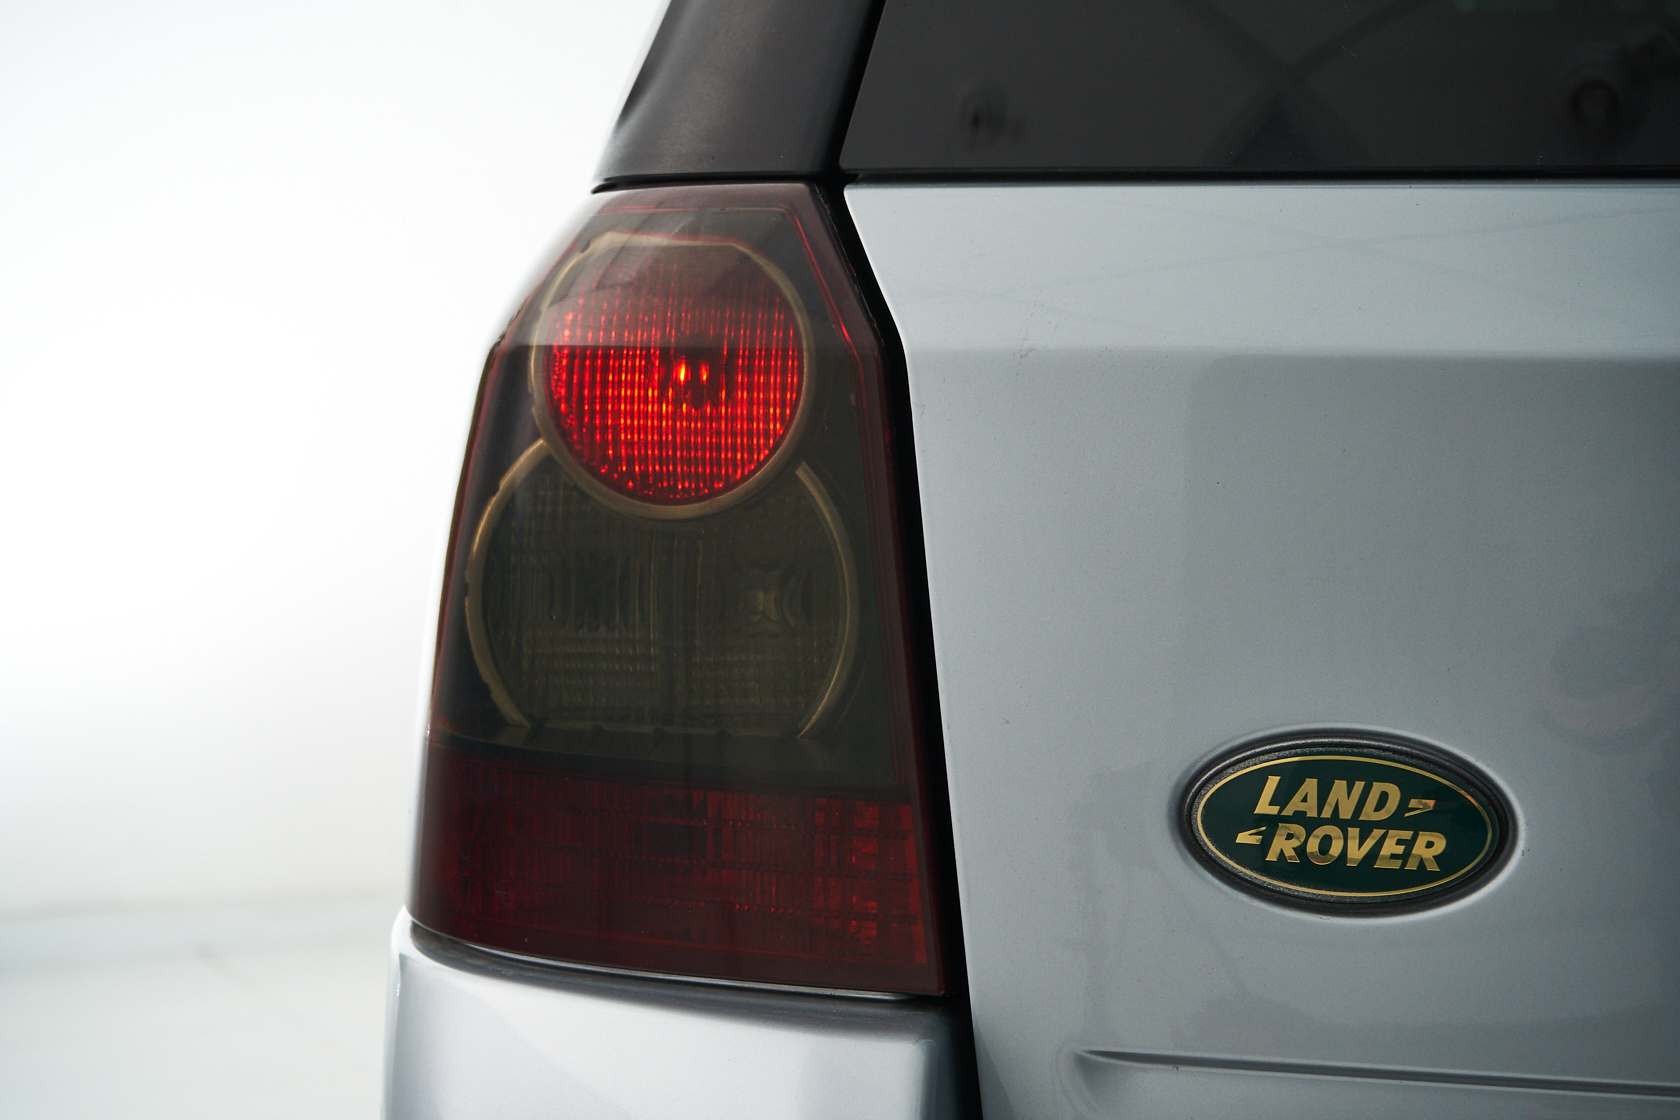 2010 Land Rover Freelander II Рестайлинг №5488201, Серый, 789000 рублей - вид 13